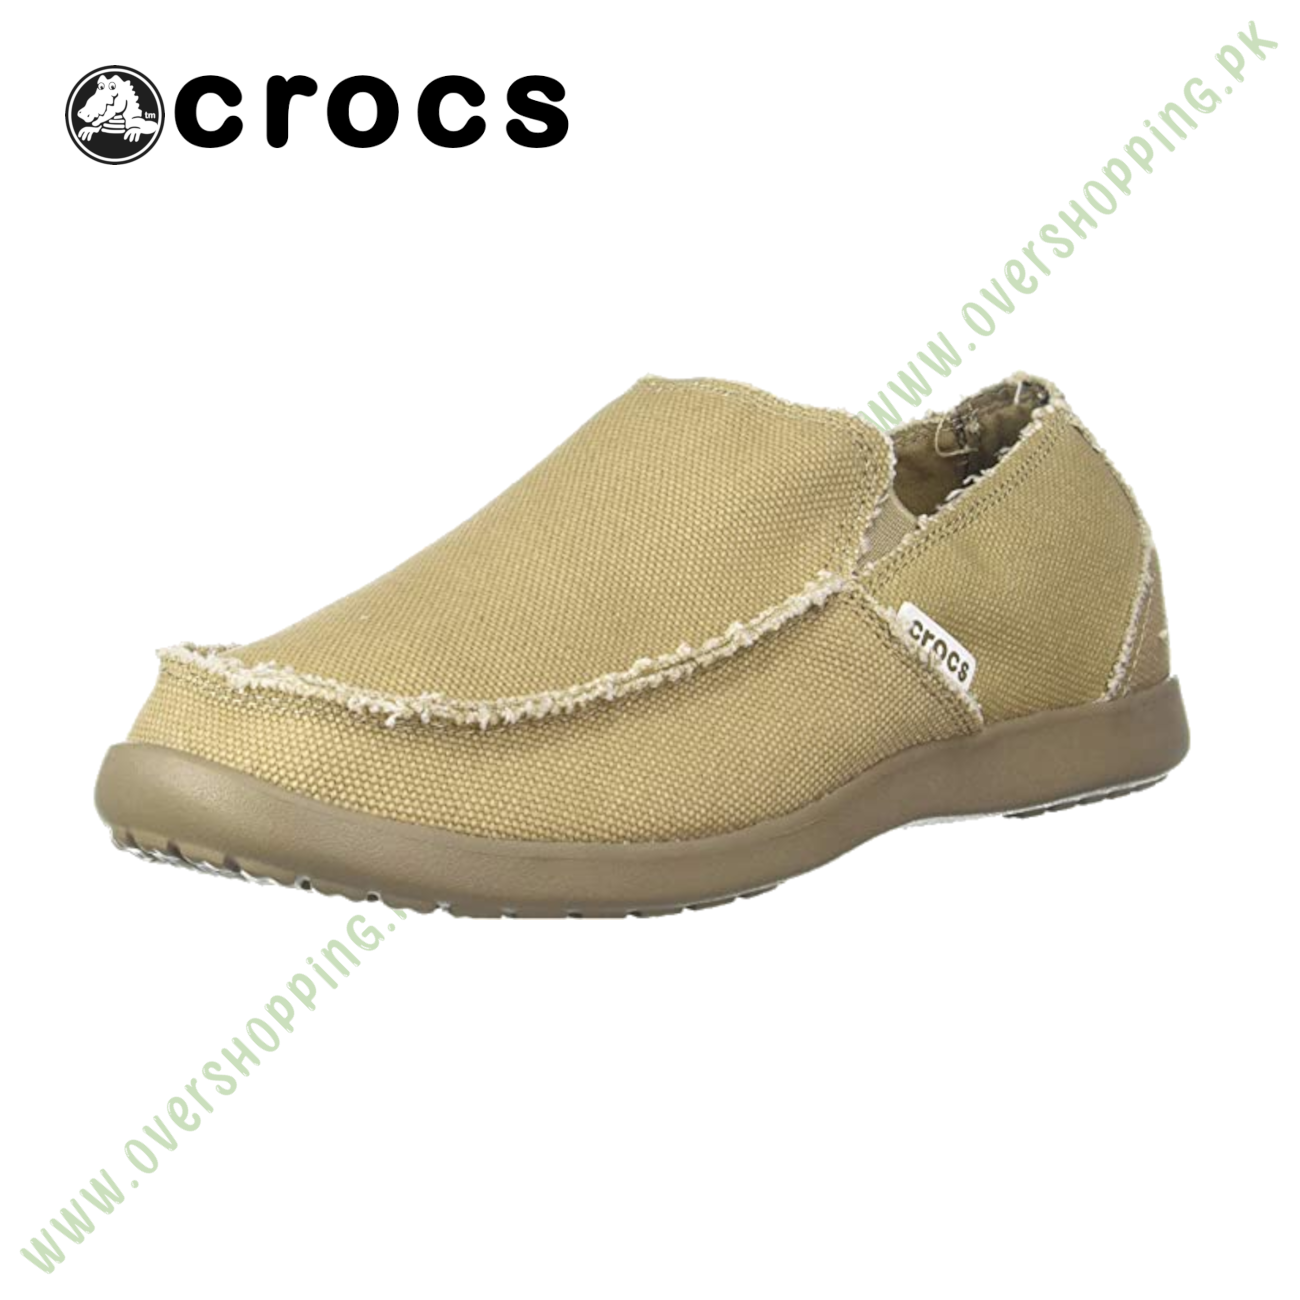 Crocs Men s Santa Cruz Slip-On Loafer,Khaki,11 (D)